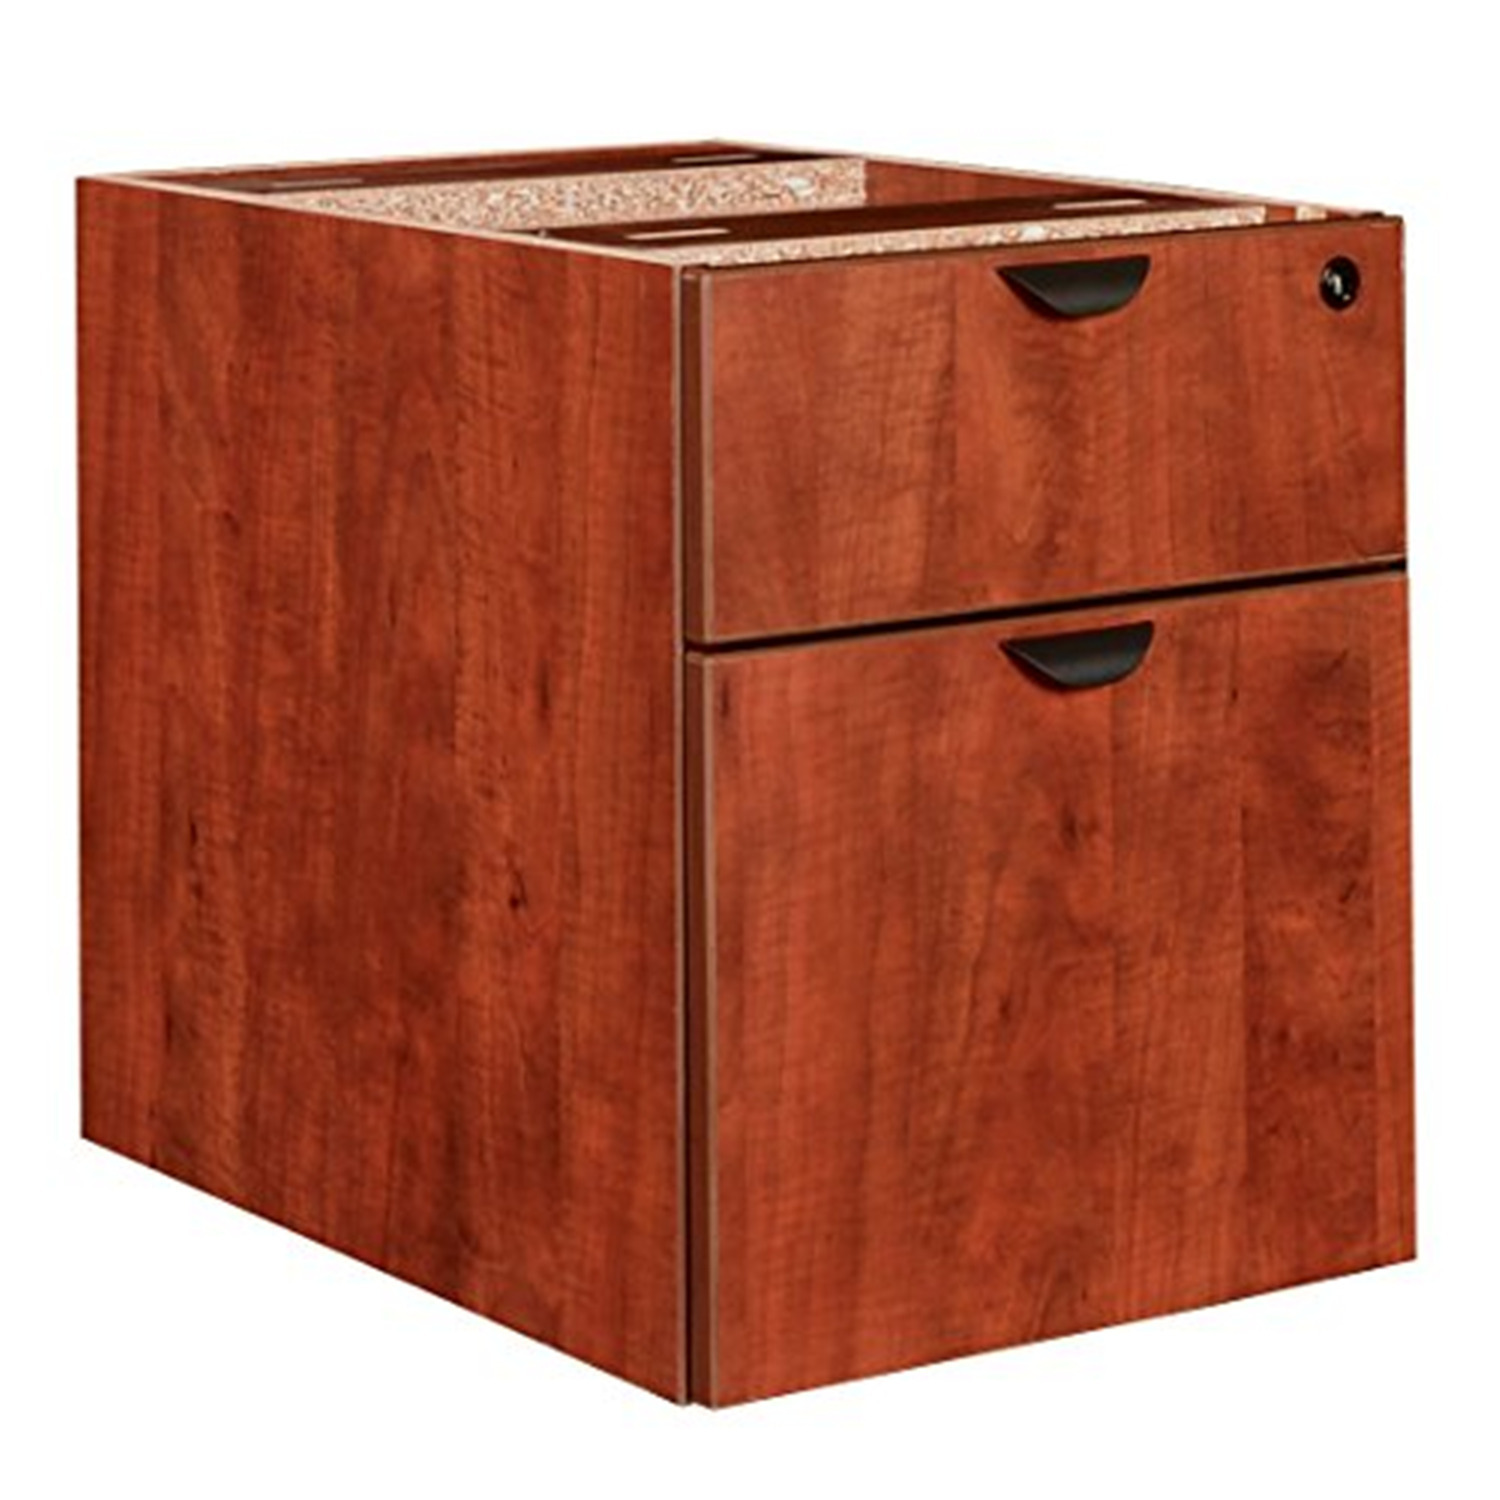 Regency Legacy Box File Pedestal Drawer Unit- Cherry - image 1 of 8